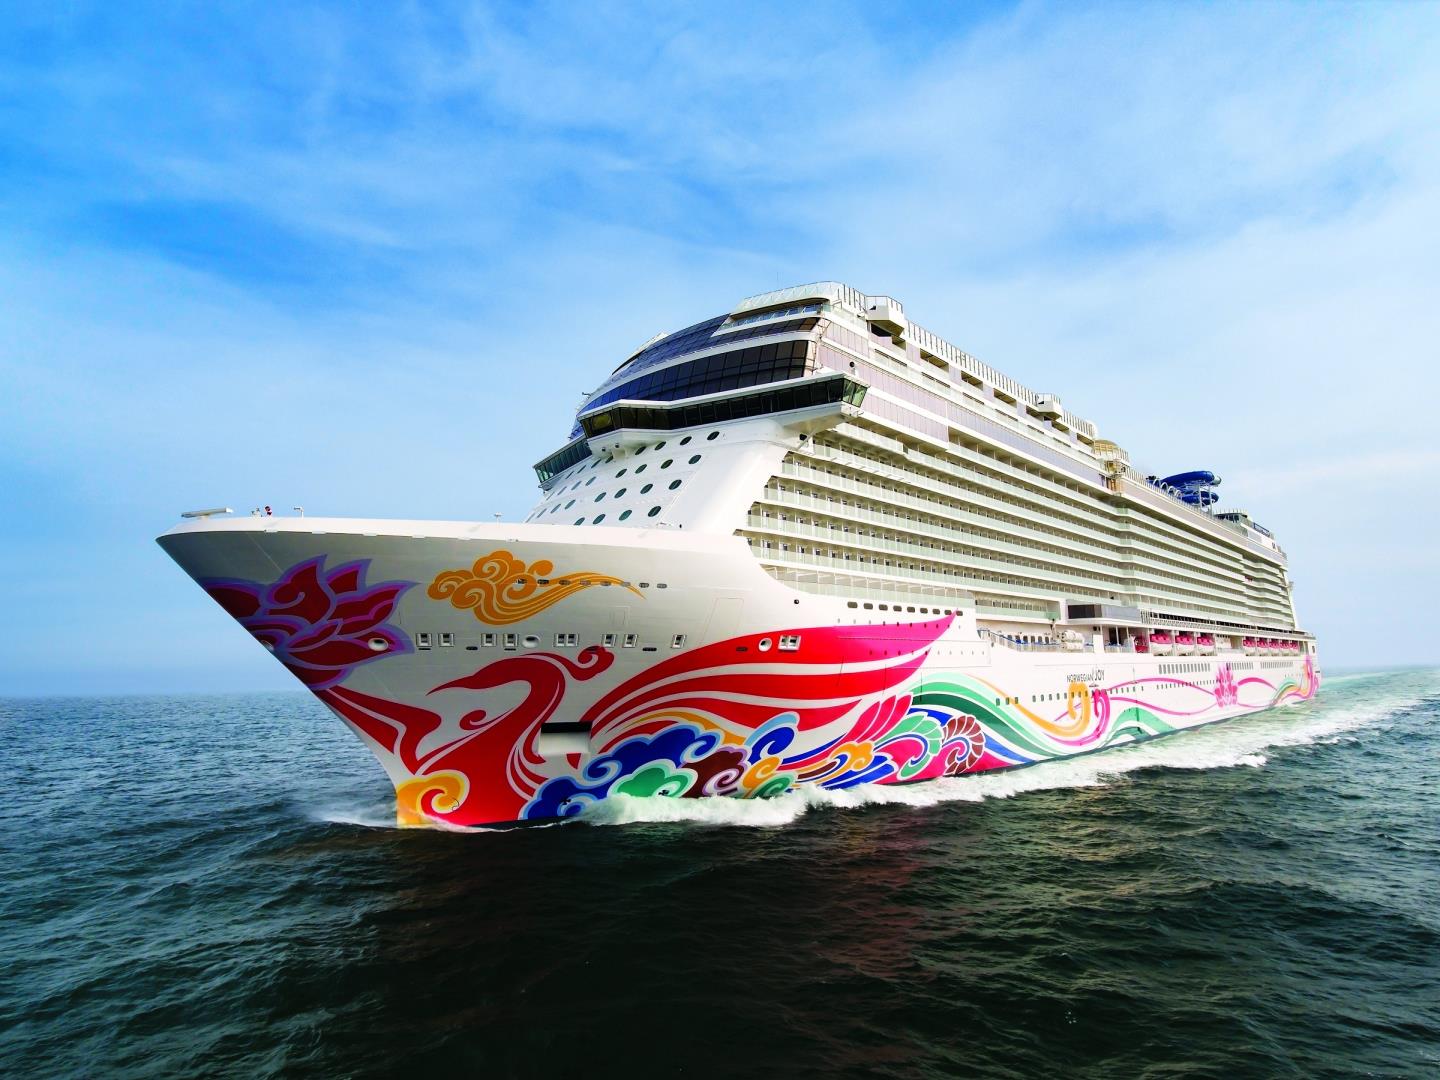 11-day Cruise to Transatlantic from Southampton London, United Kingdom on Norwegian Joy